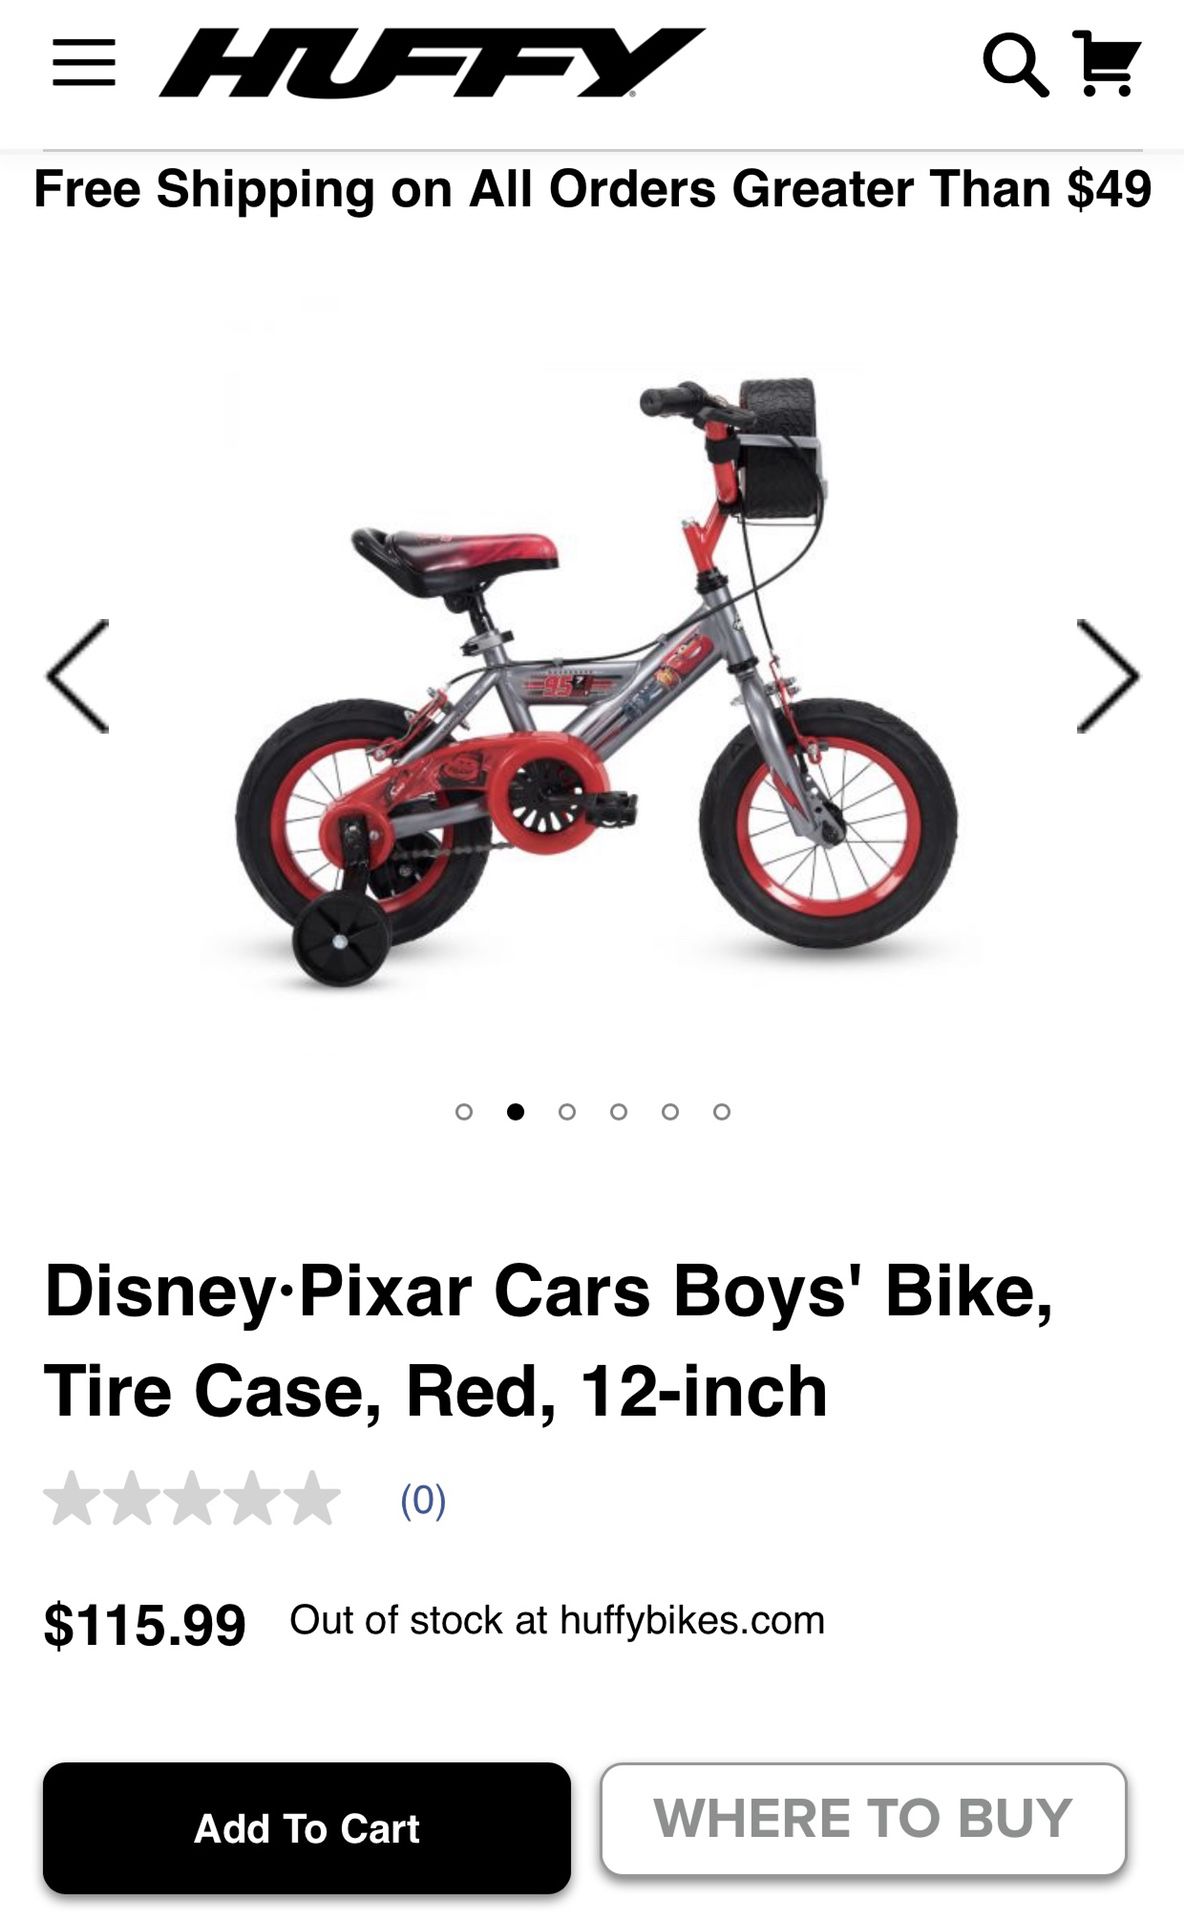 Disney Pixar cars boys bike w/tire case red and gray 12 inch bike